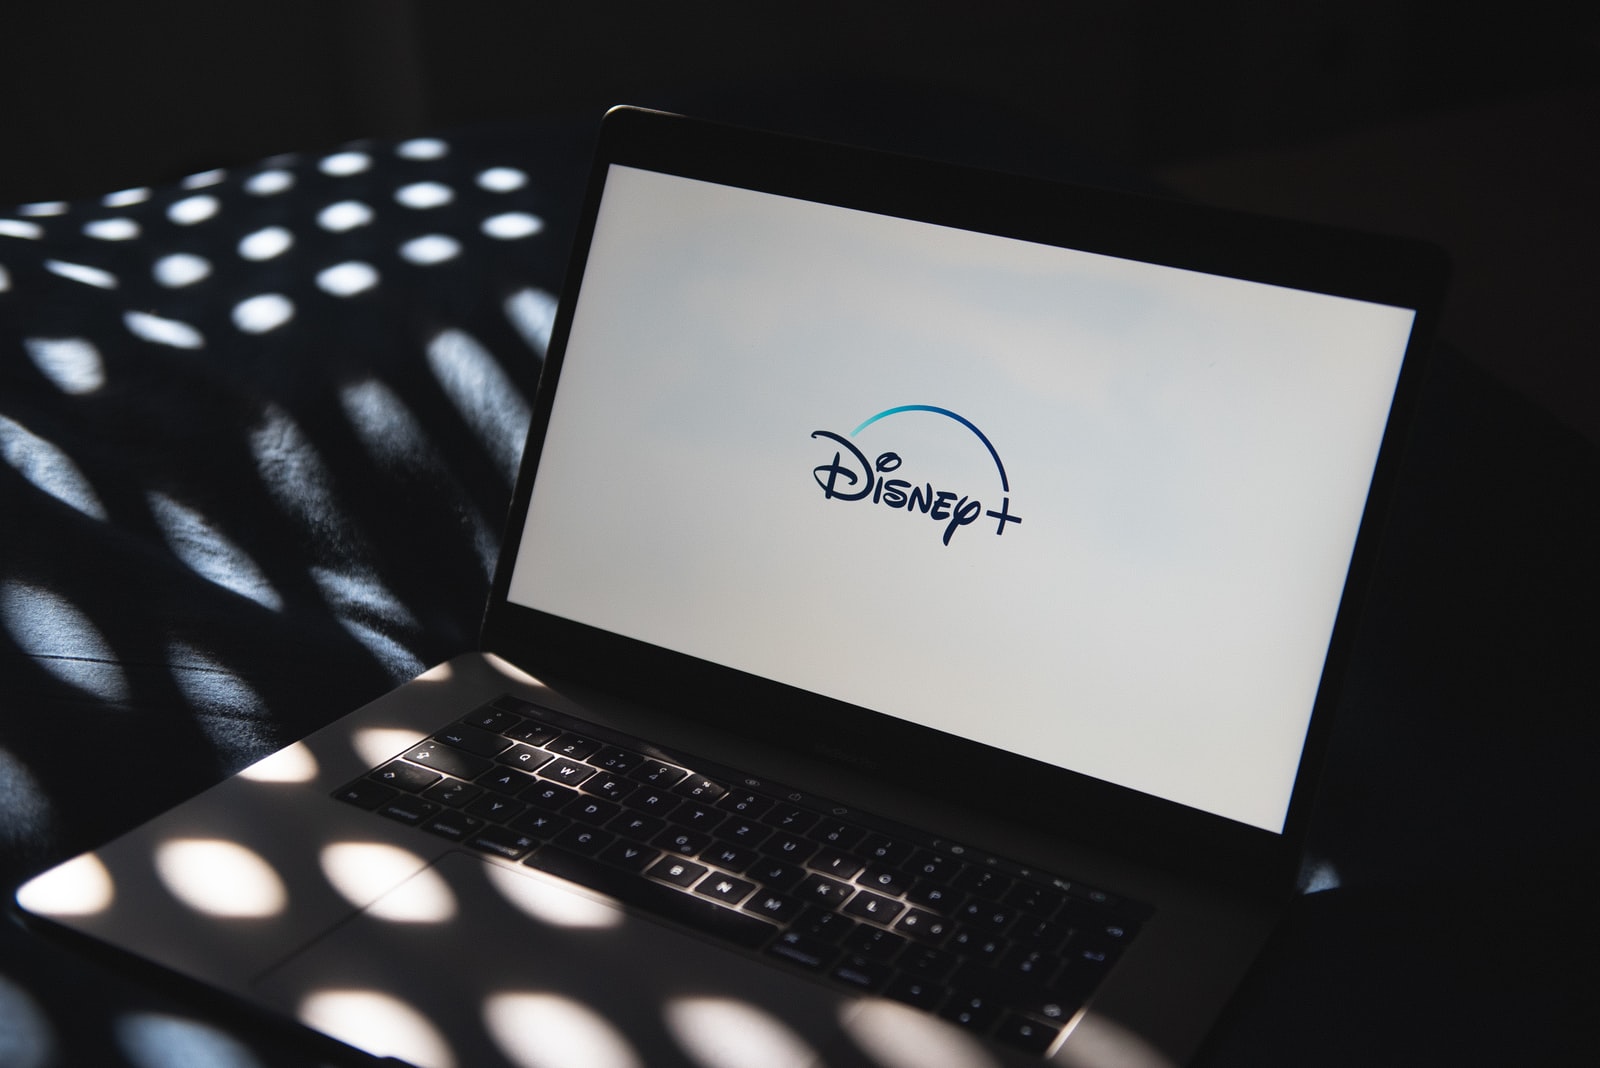 How to Watch Disney + on Apple TV